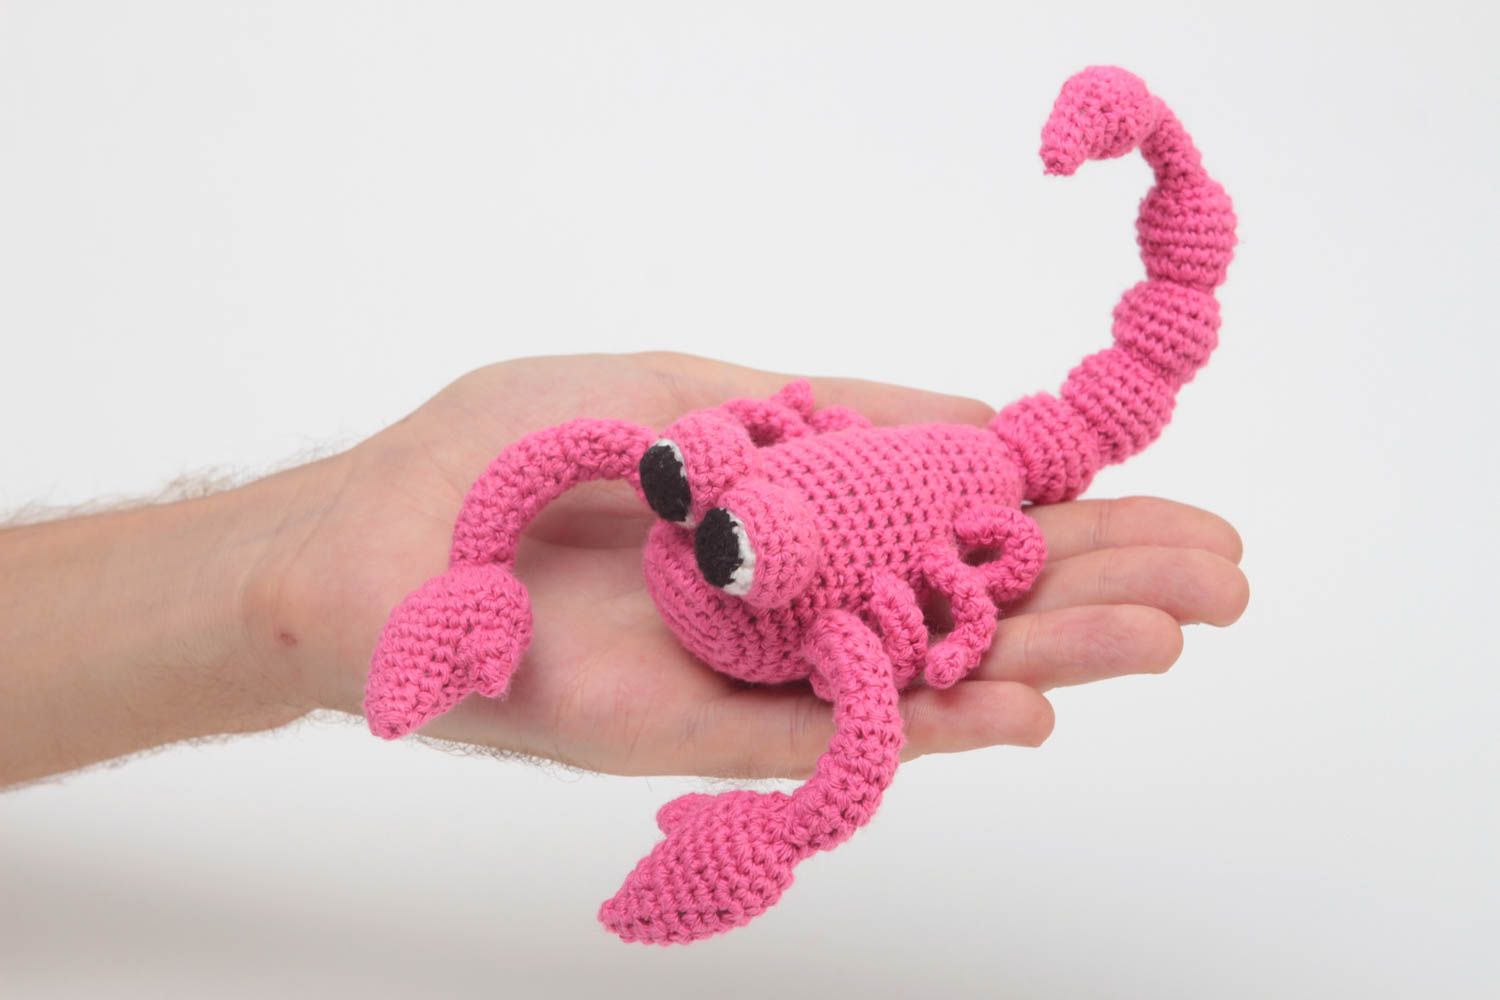 Cute handmade crochet toy unusual stuffed toy childrens soft toys gift ideas photo 5